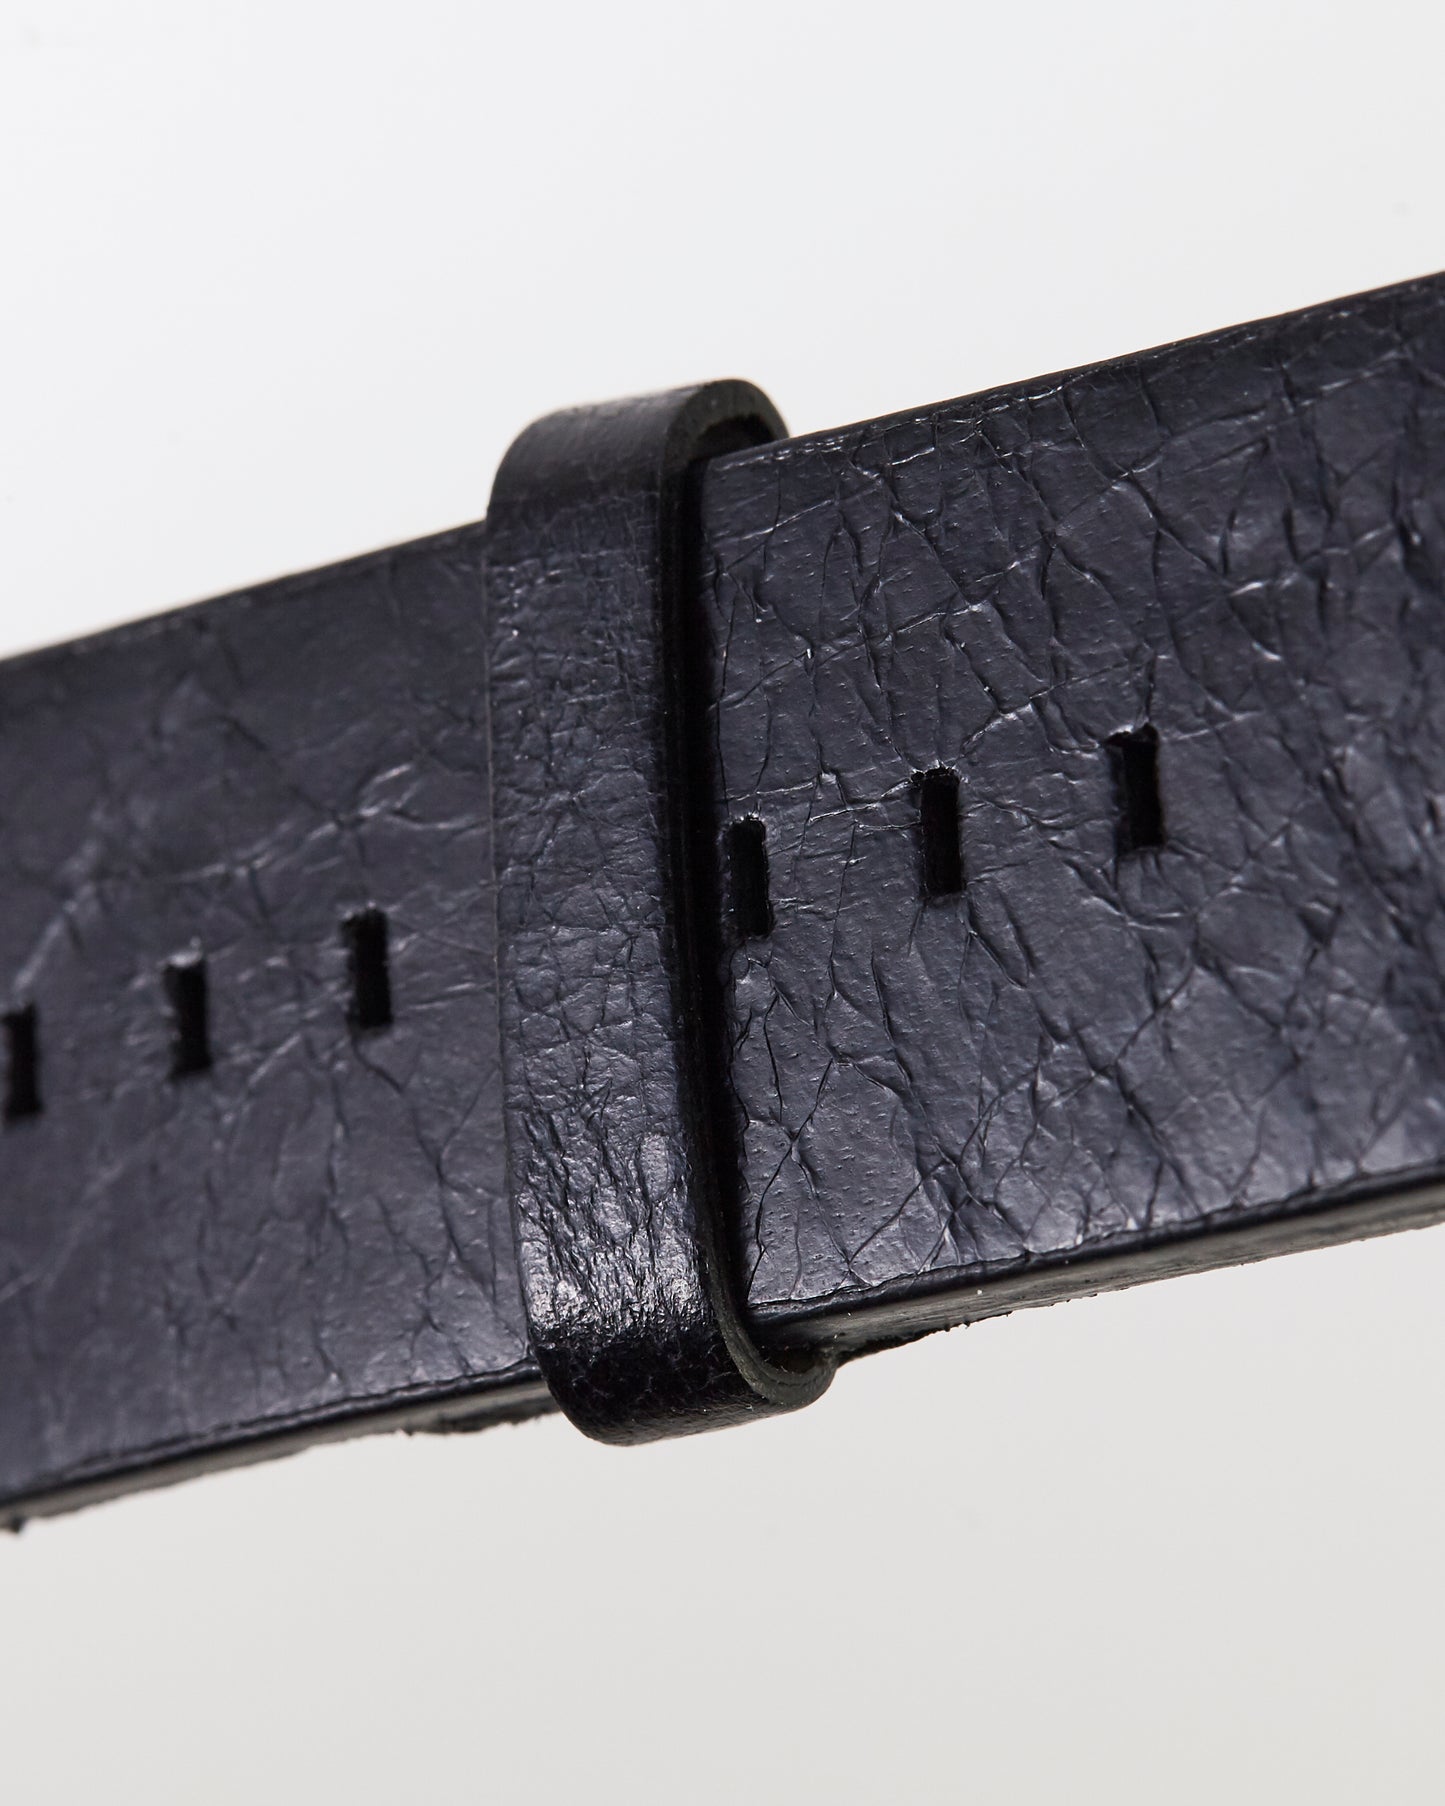 Ecclissi 23255 Black Leather Strap 24mm x 24mm